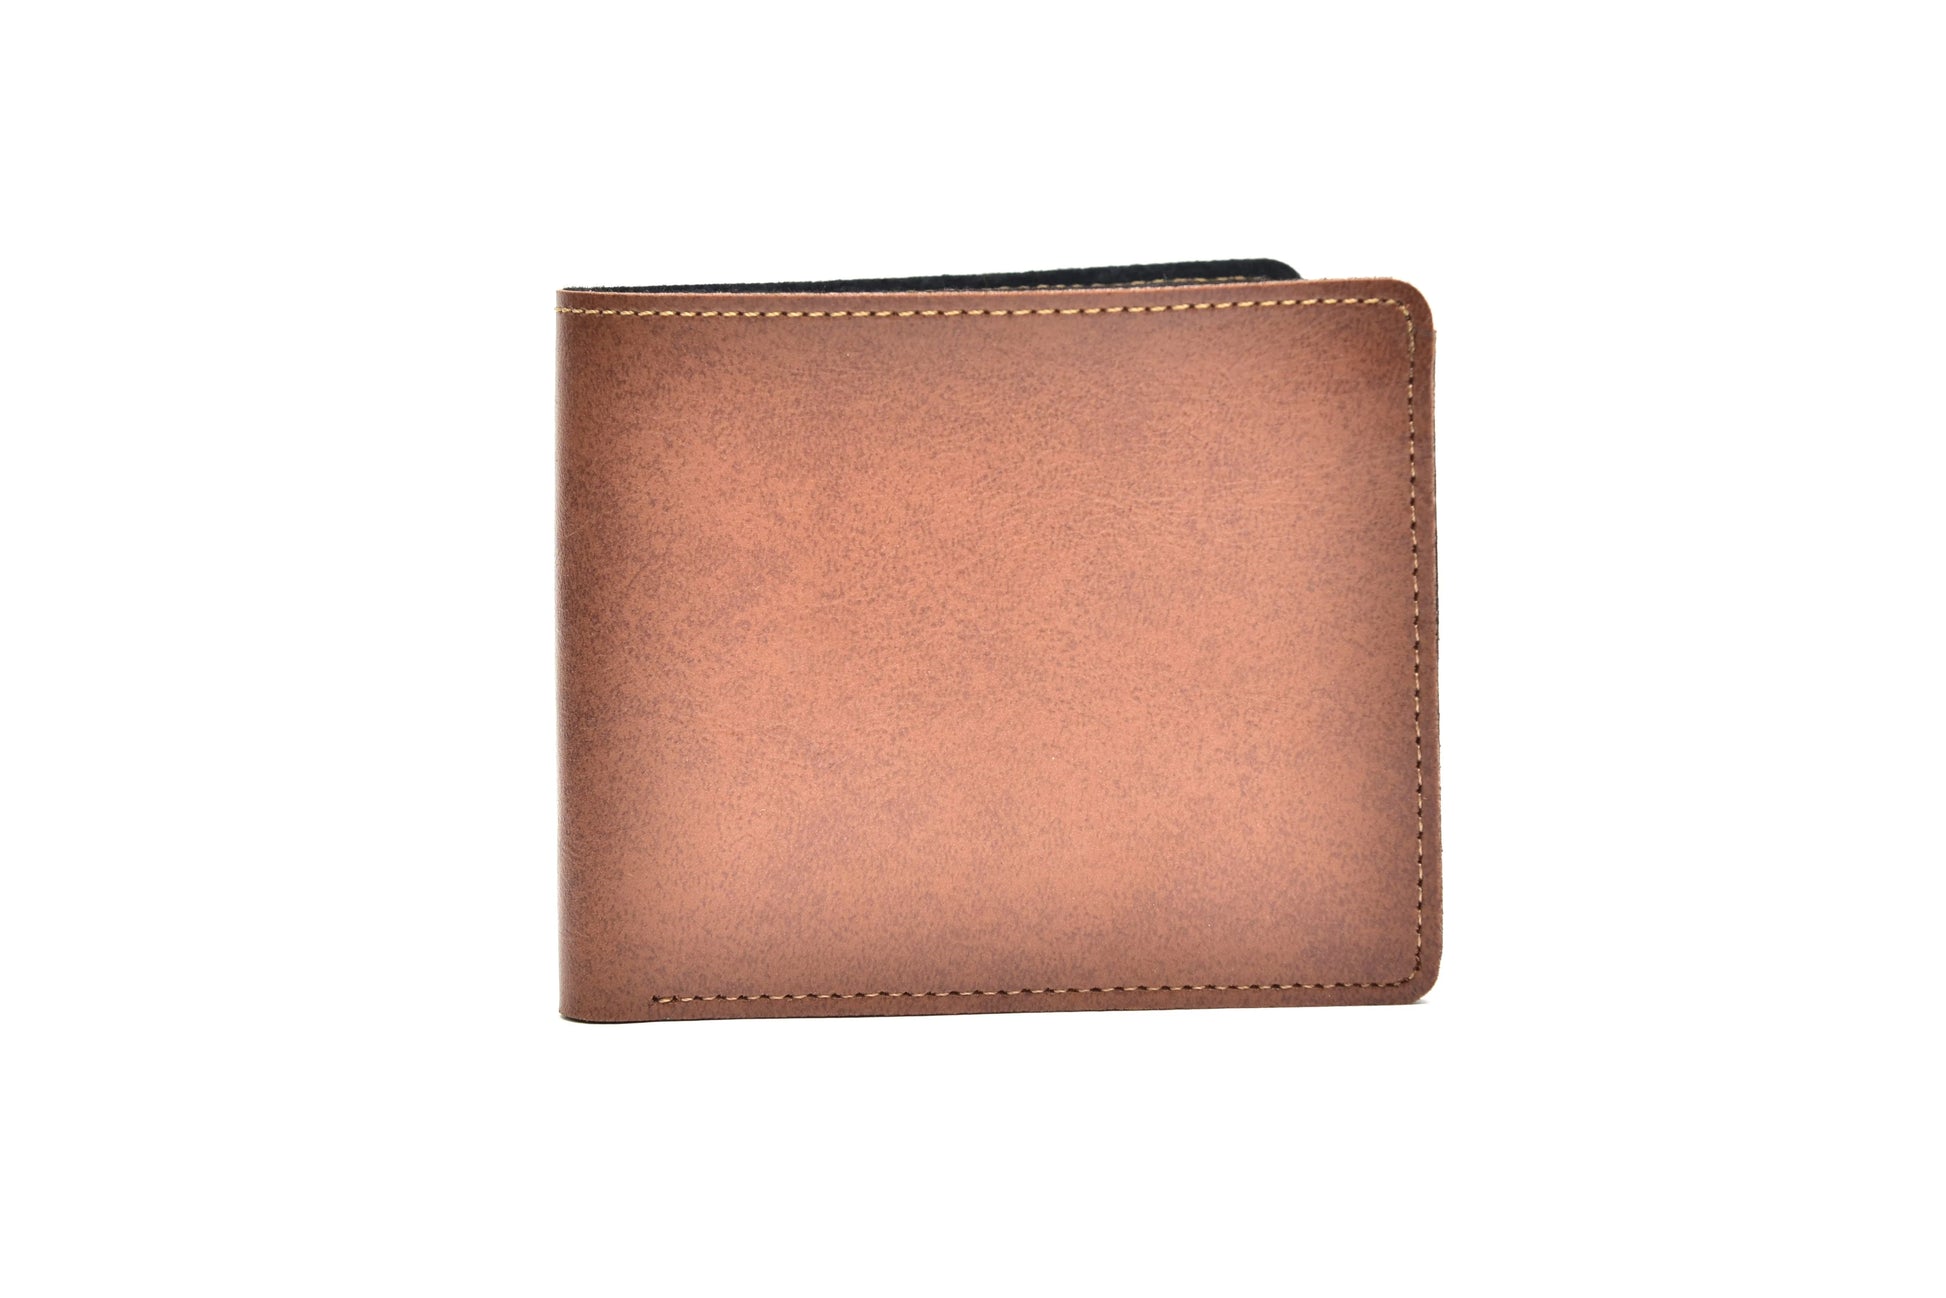 Classy Leather Customized Men's Wallet (Tan).Inside/open view